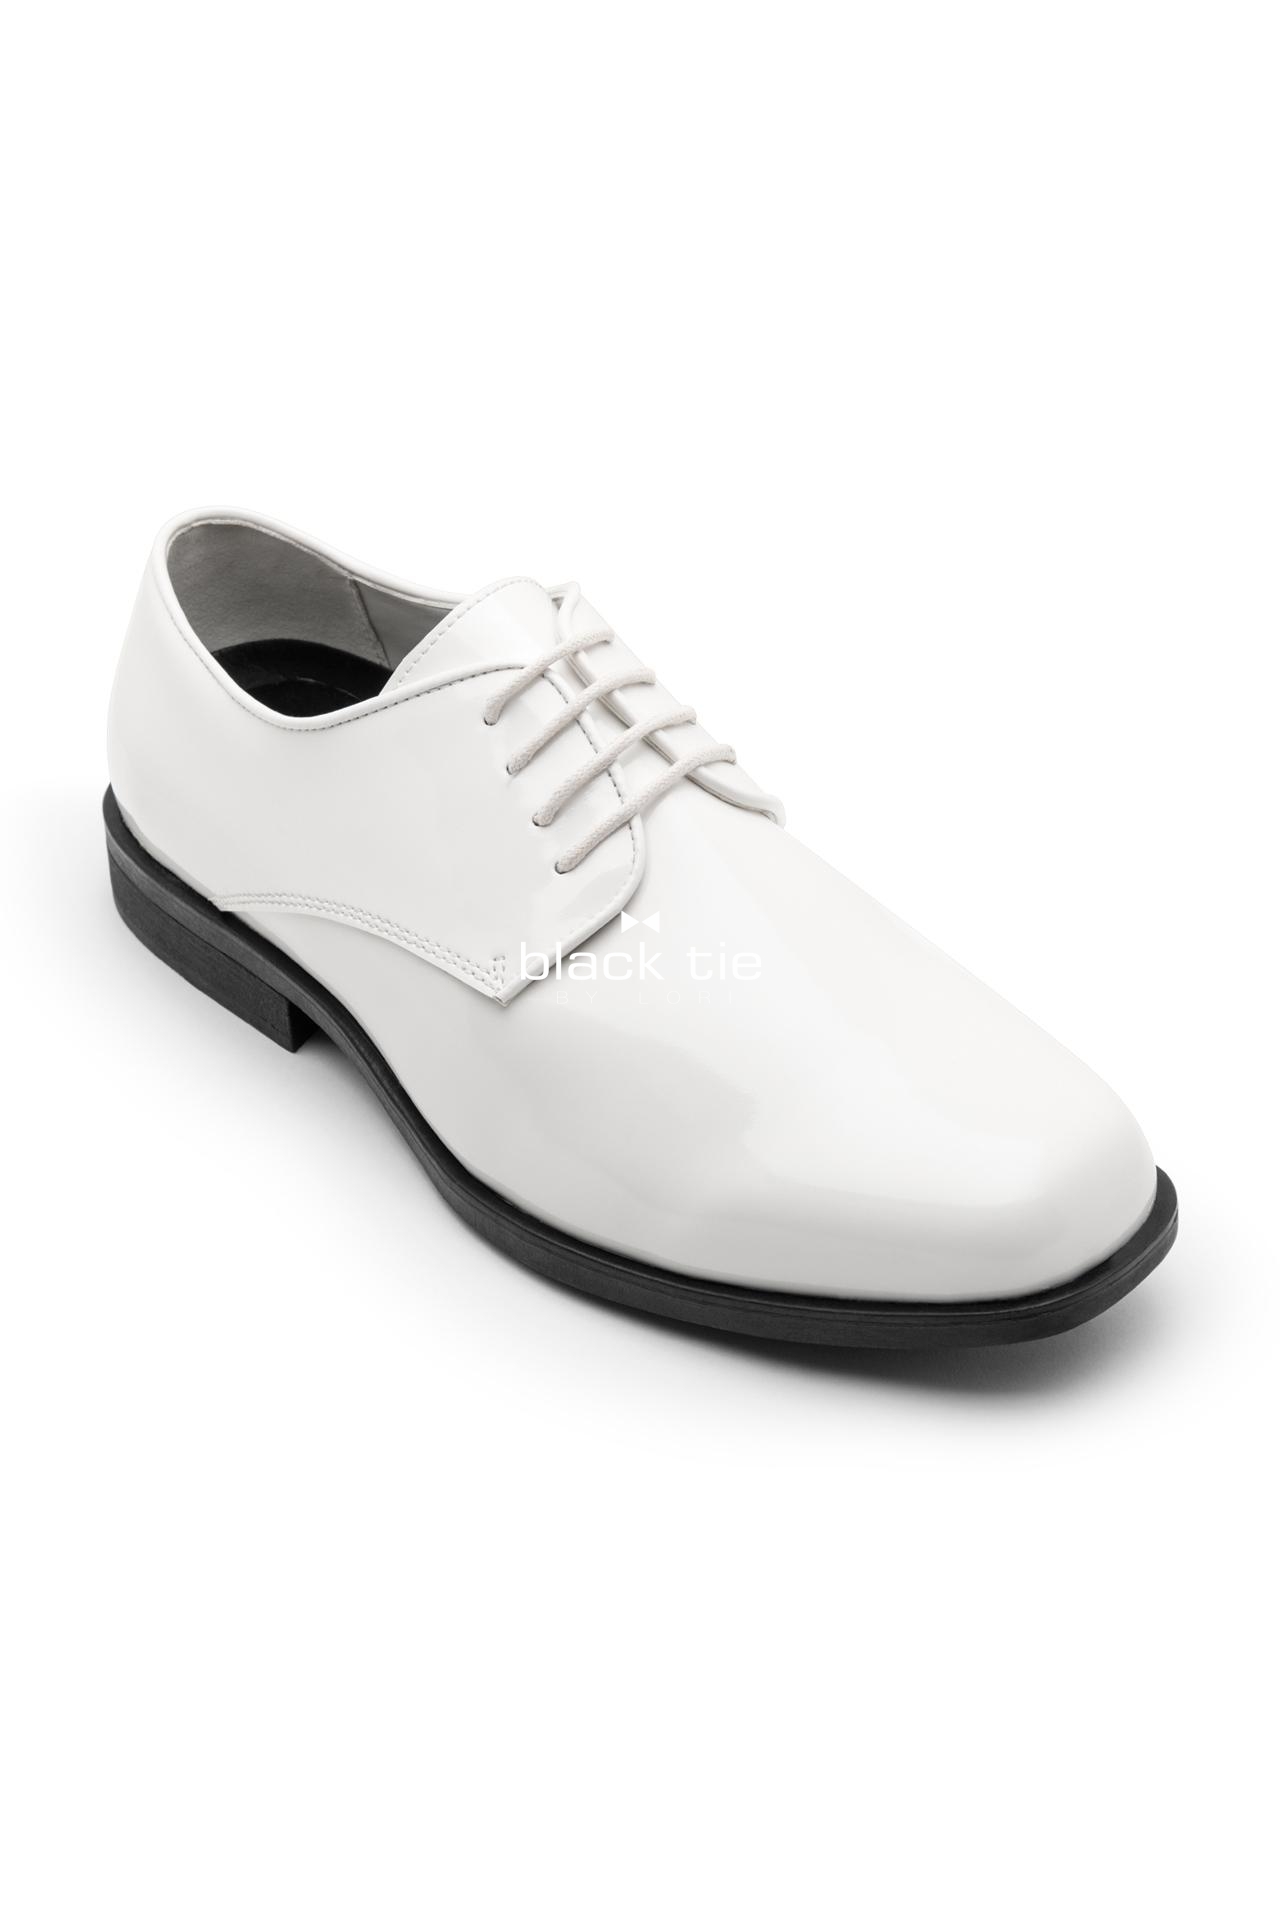 White Allegro Shoe - Tux & Suit rentals or sales